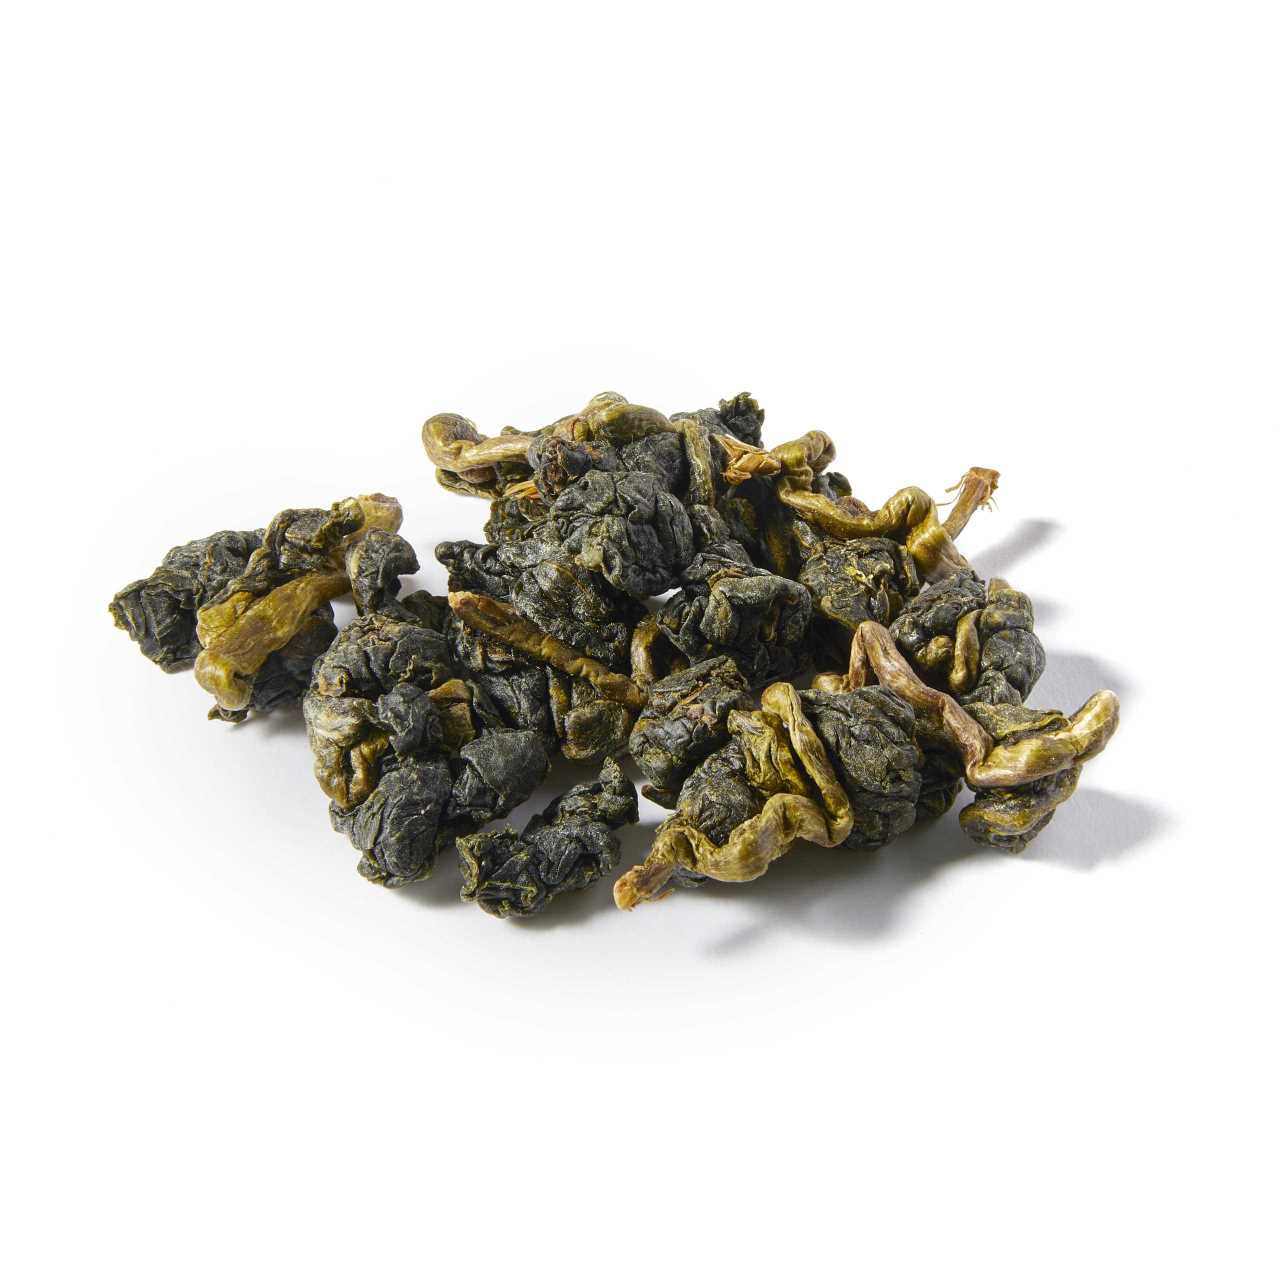 A macro pile of Ali Shan Oolong loose leaf tea on a table